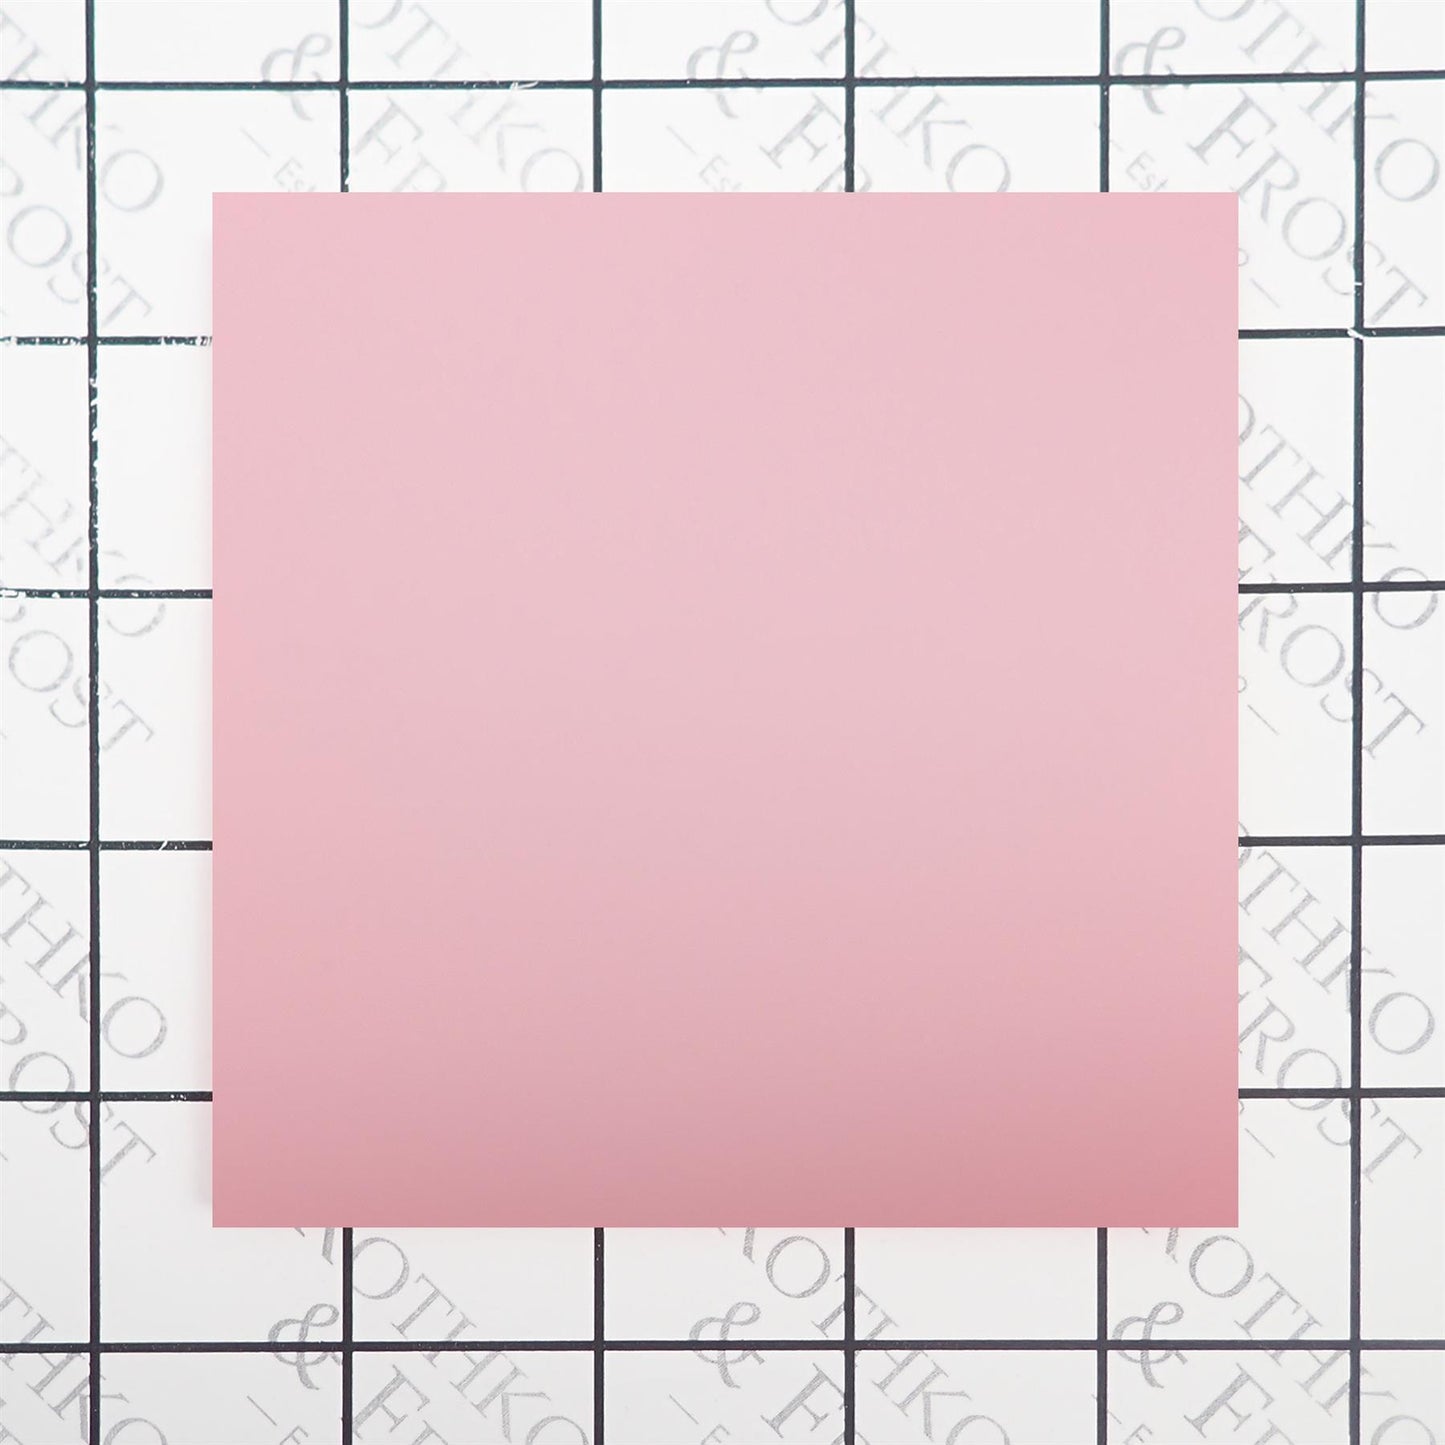 Incudo Pink Satin Metallic Acrylic Sheet - 300x200x3mm